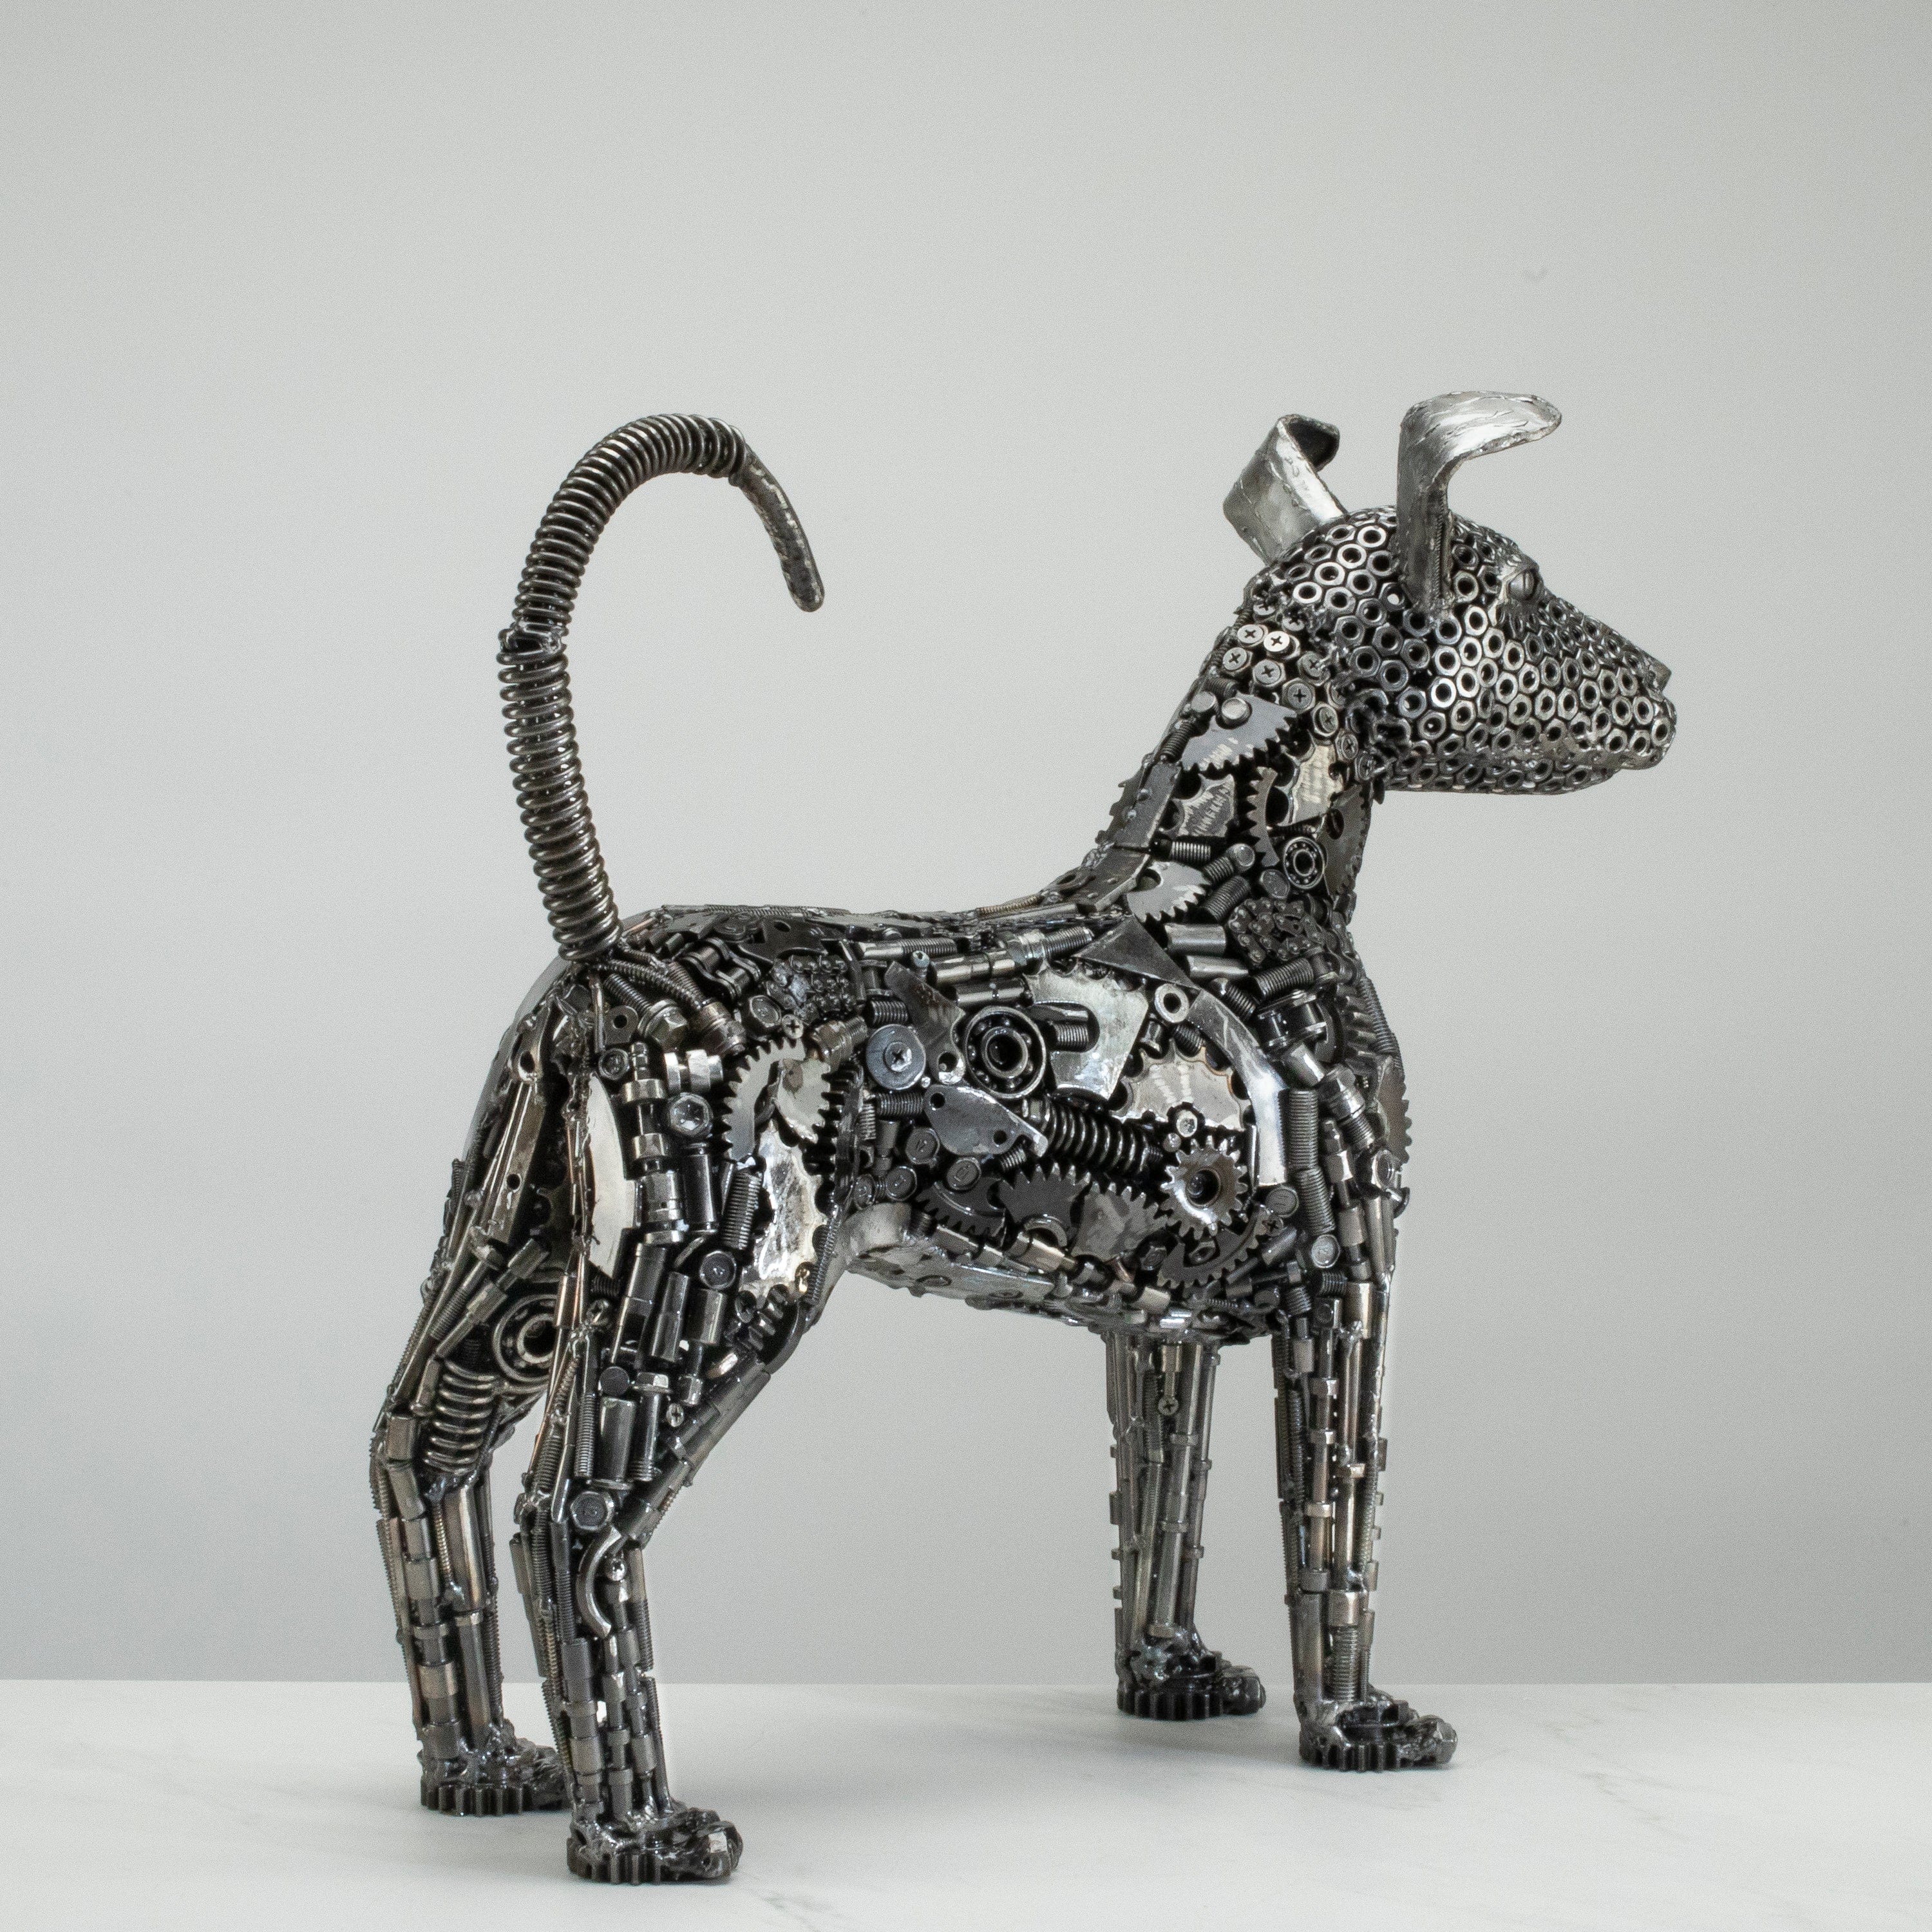 KALIFANO Recycled Metal Art 20" Bull Terrier Dog Recycled Metal Art Sculpture RMS-BT50x48-PK